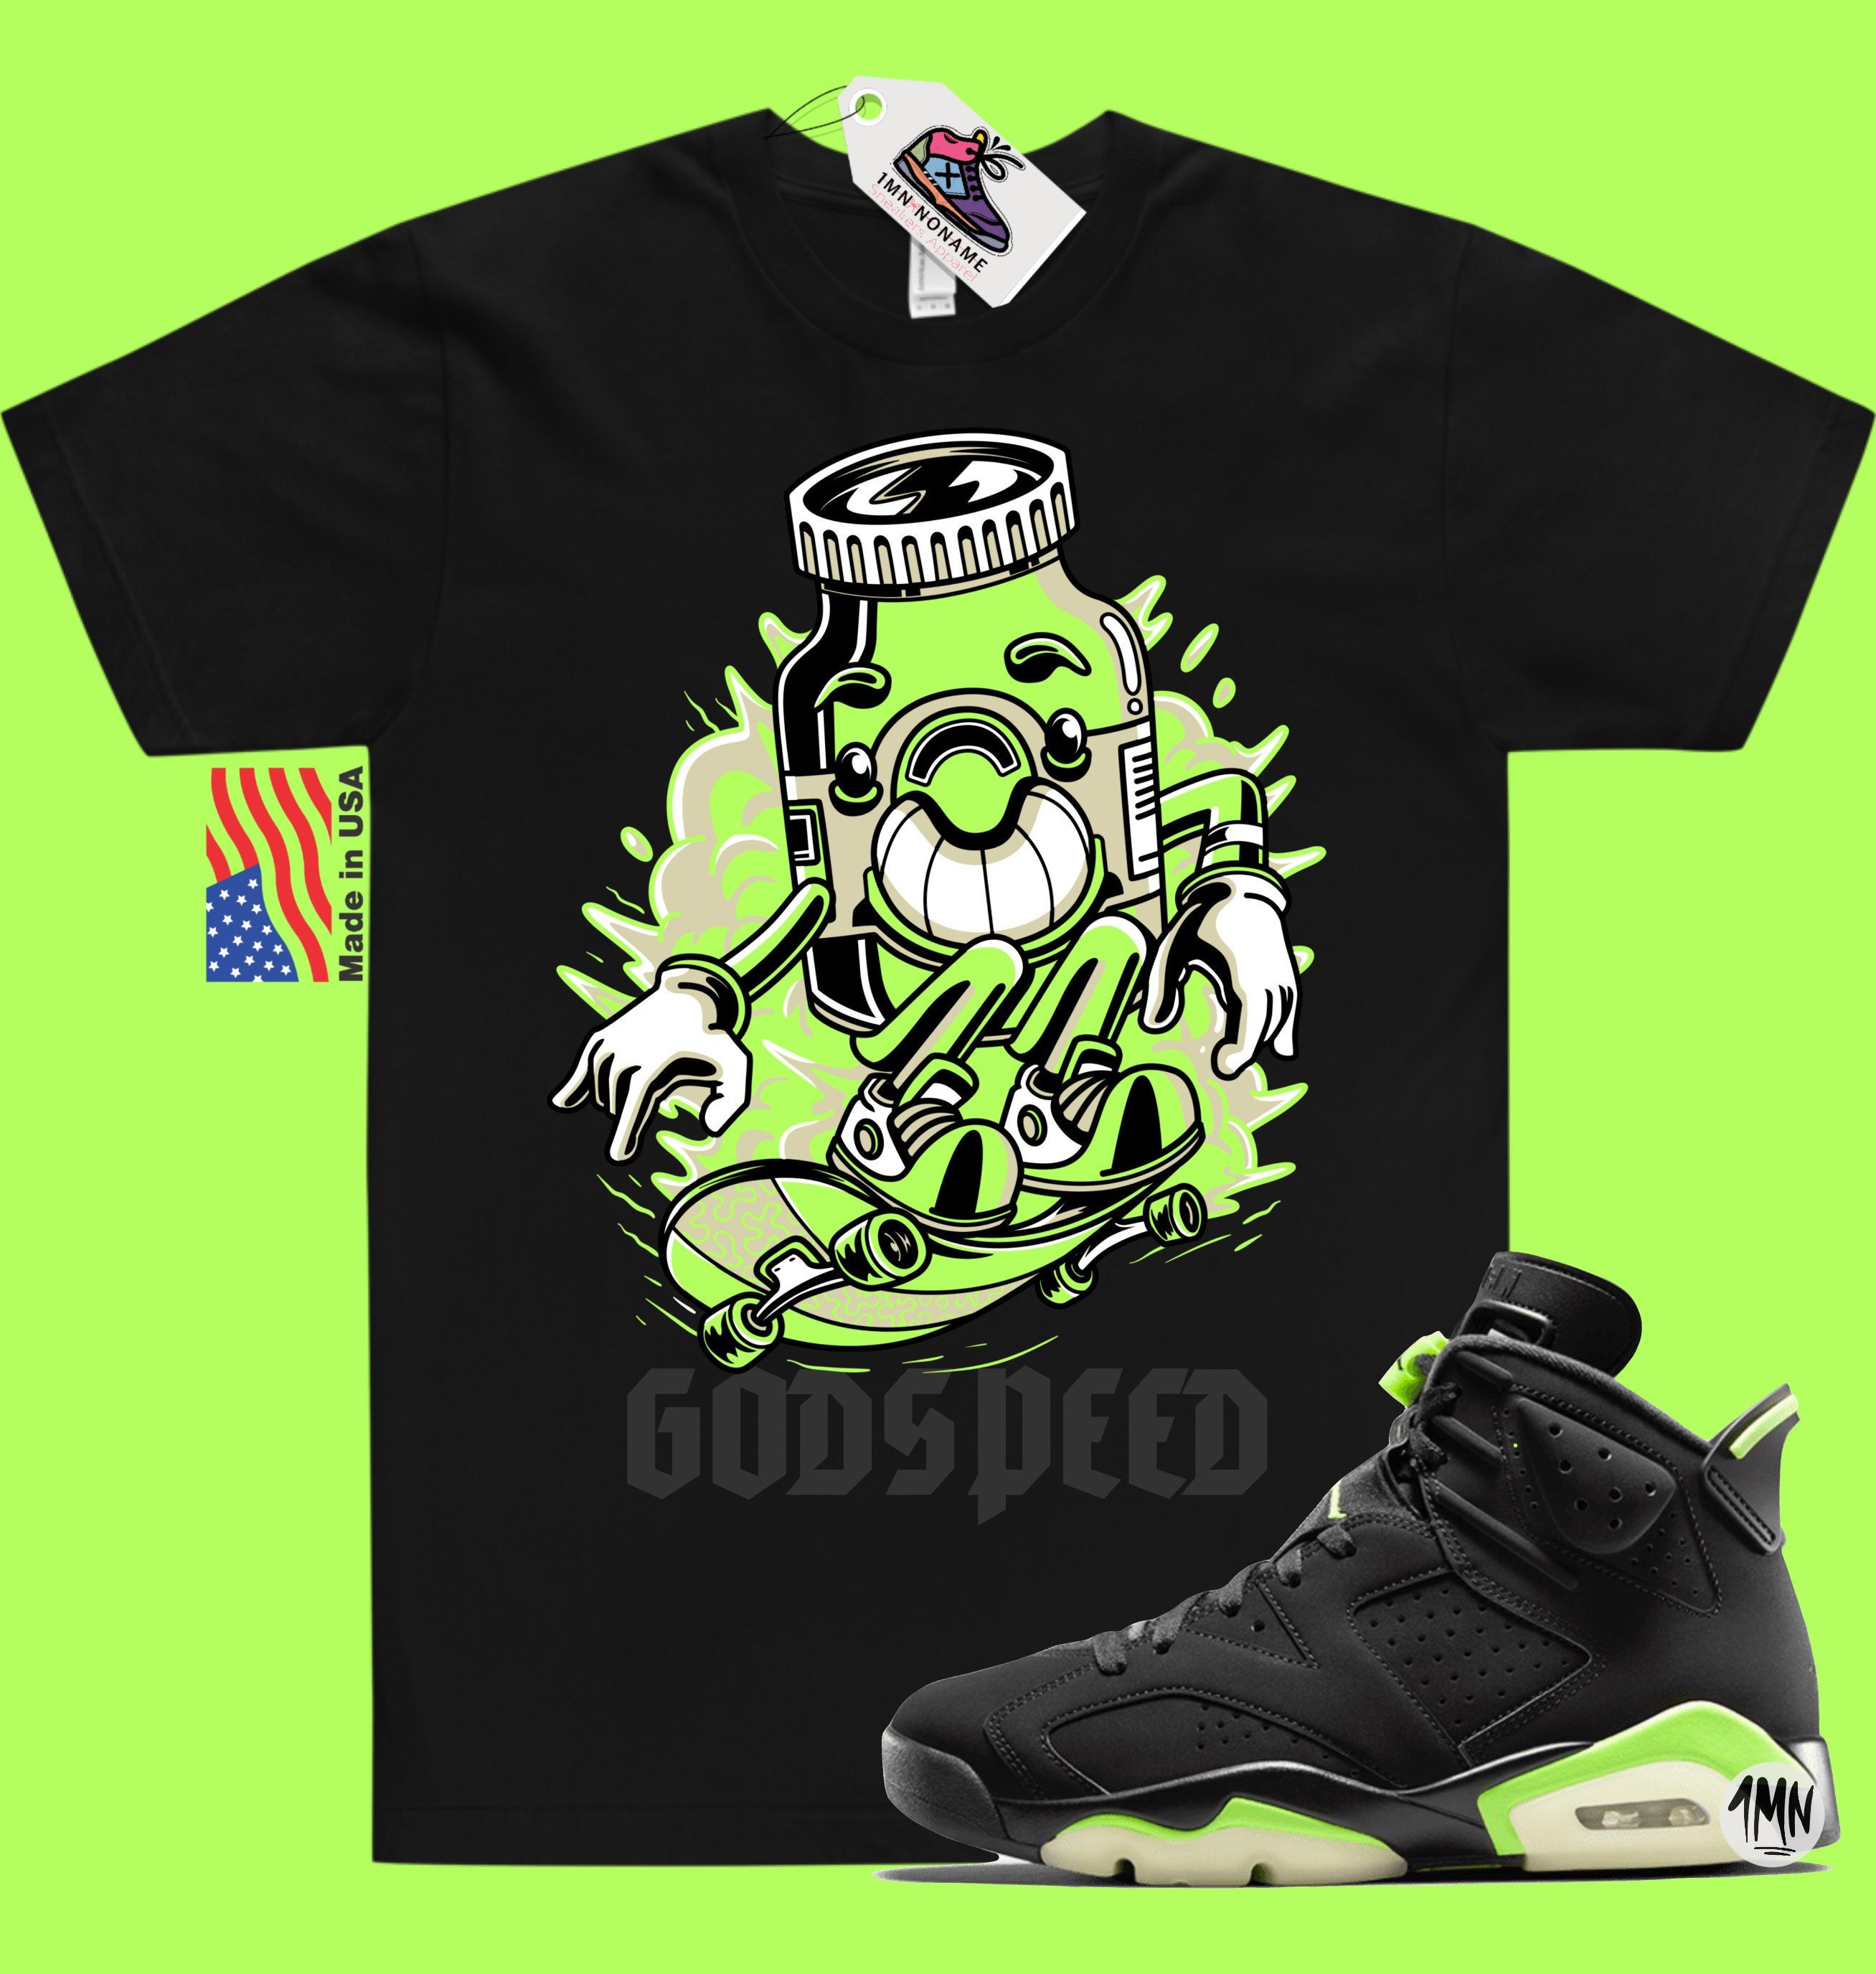 Jordan 6 Retro Electric Green Match Shirt godspeed - Etsy UK